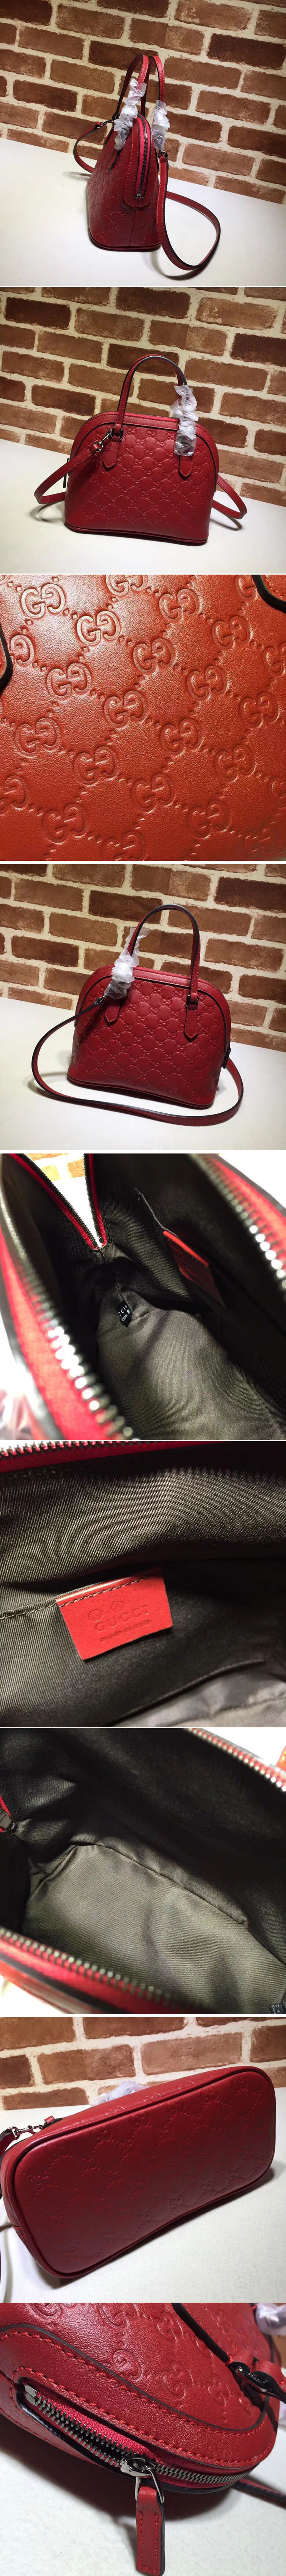 Replica Gucci 341504 Calfskin Leather Small Tote Bags Red